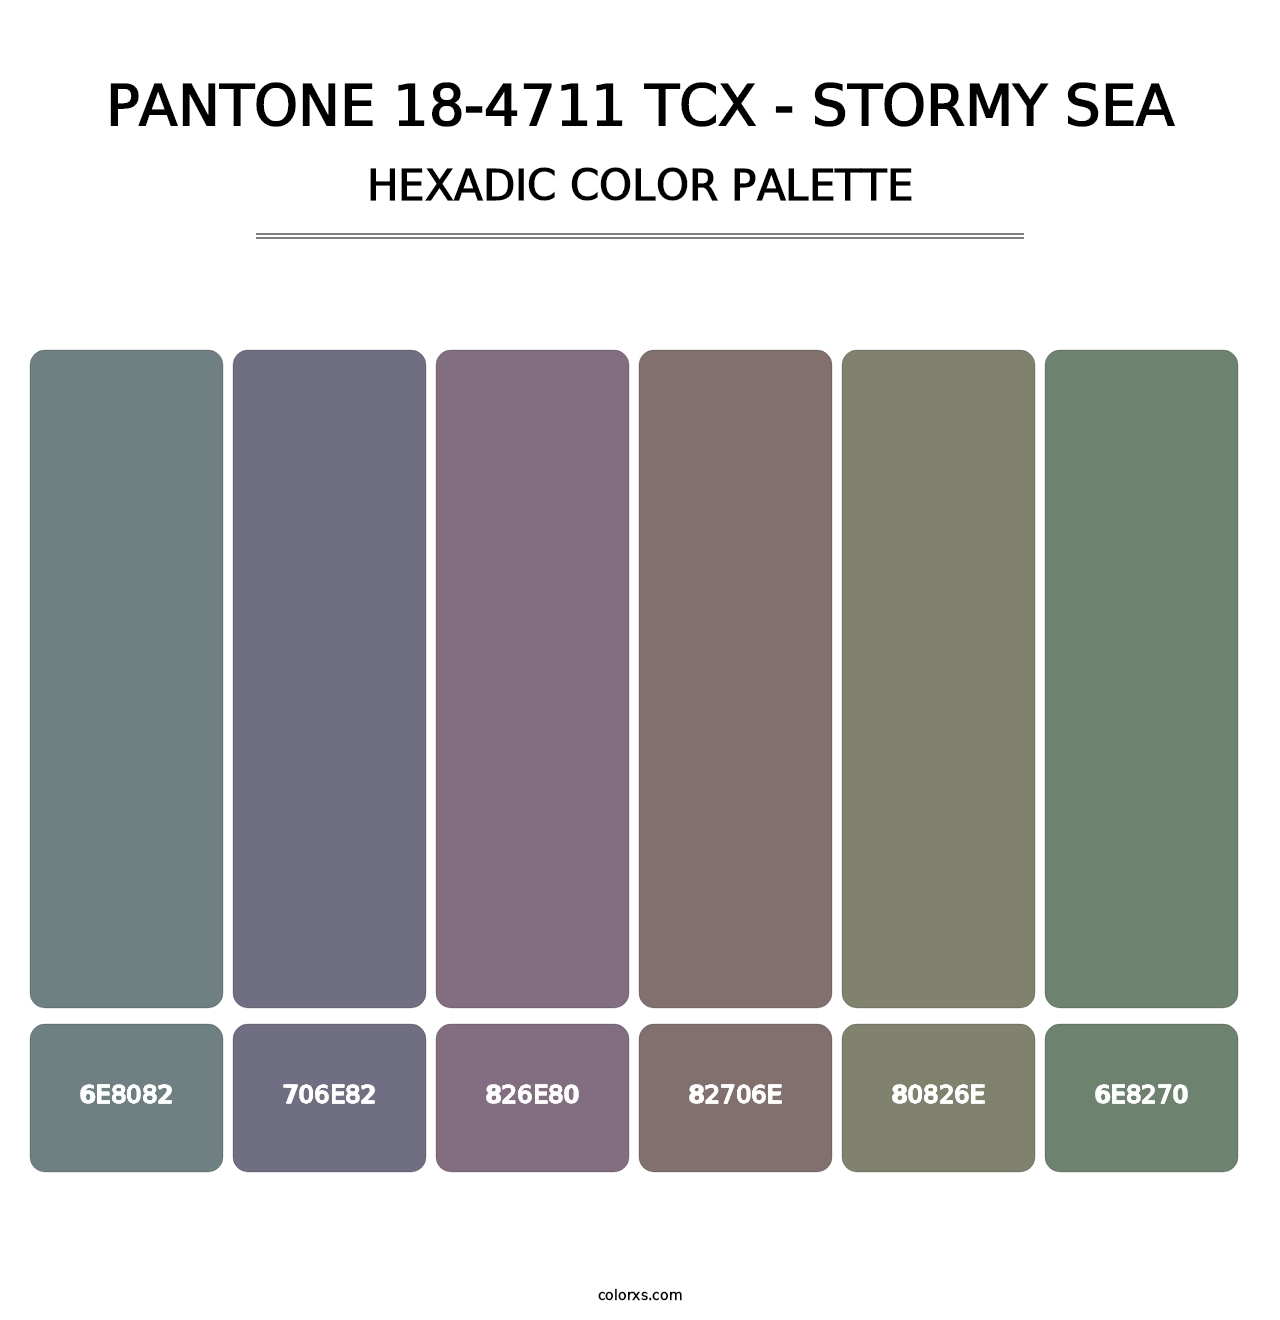 PANTONE 18-4711 TCX - Stormy Sea - Hexadic Color Palette